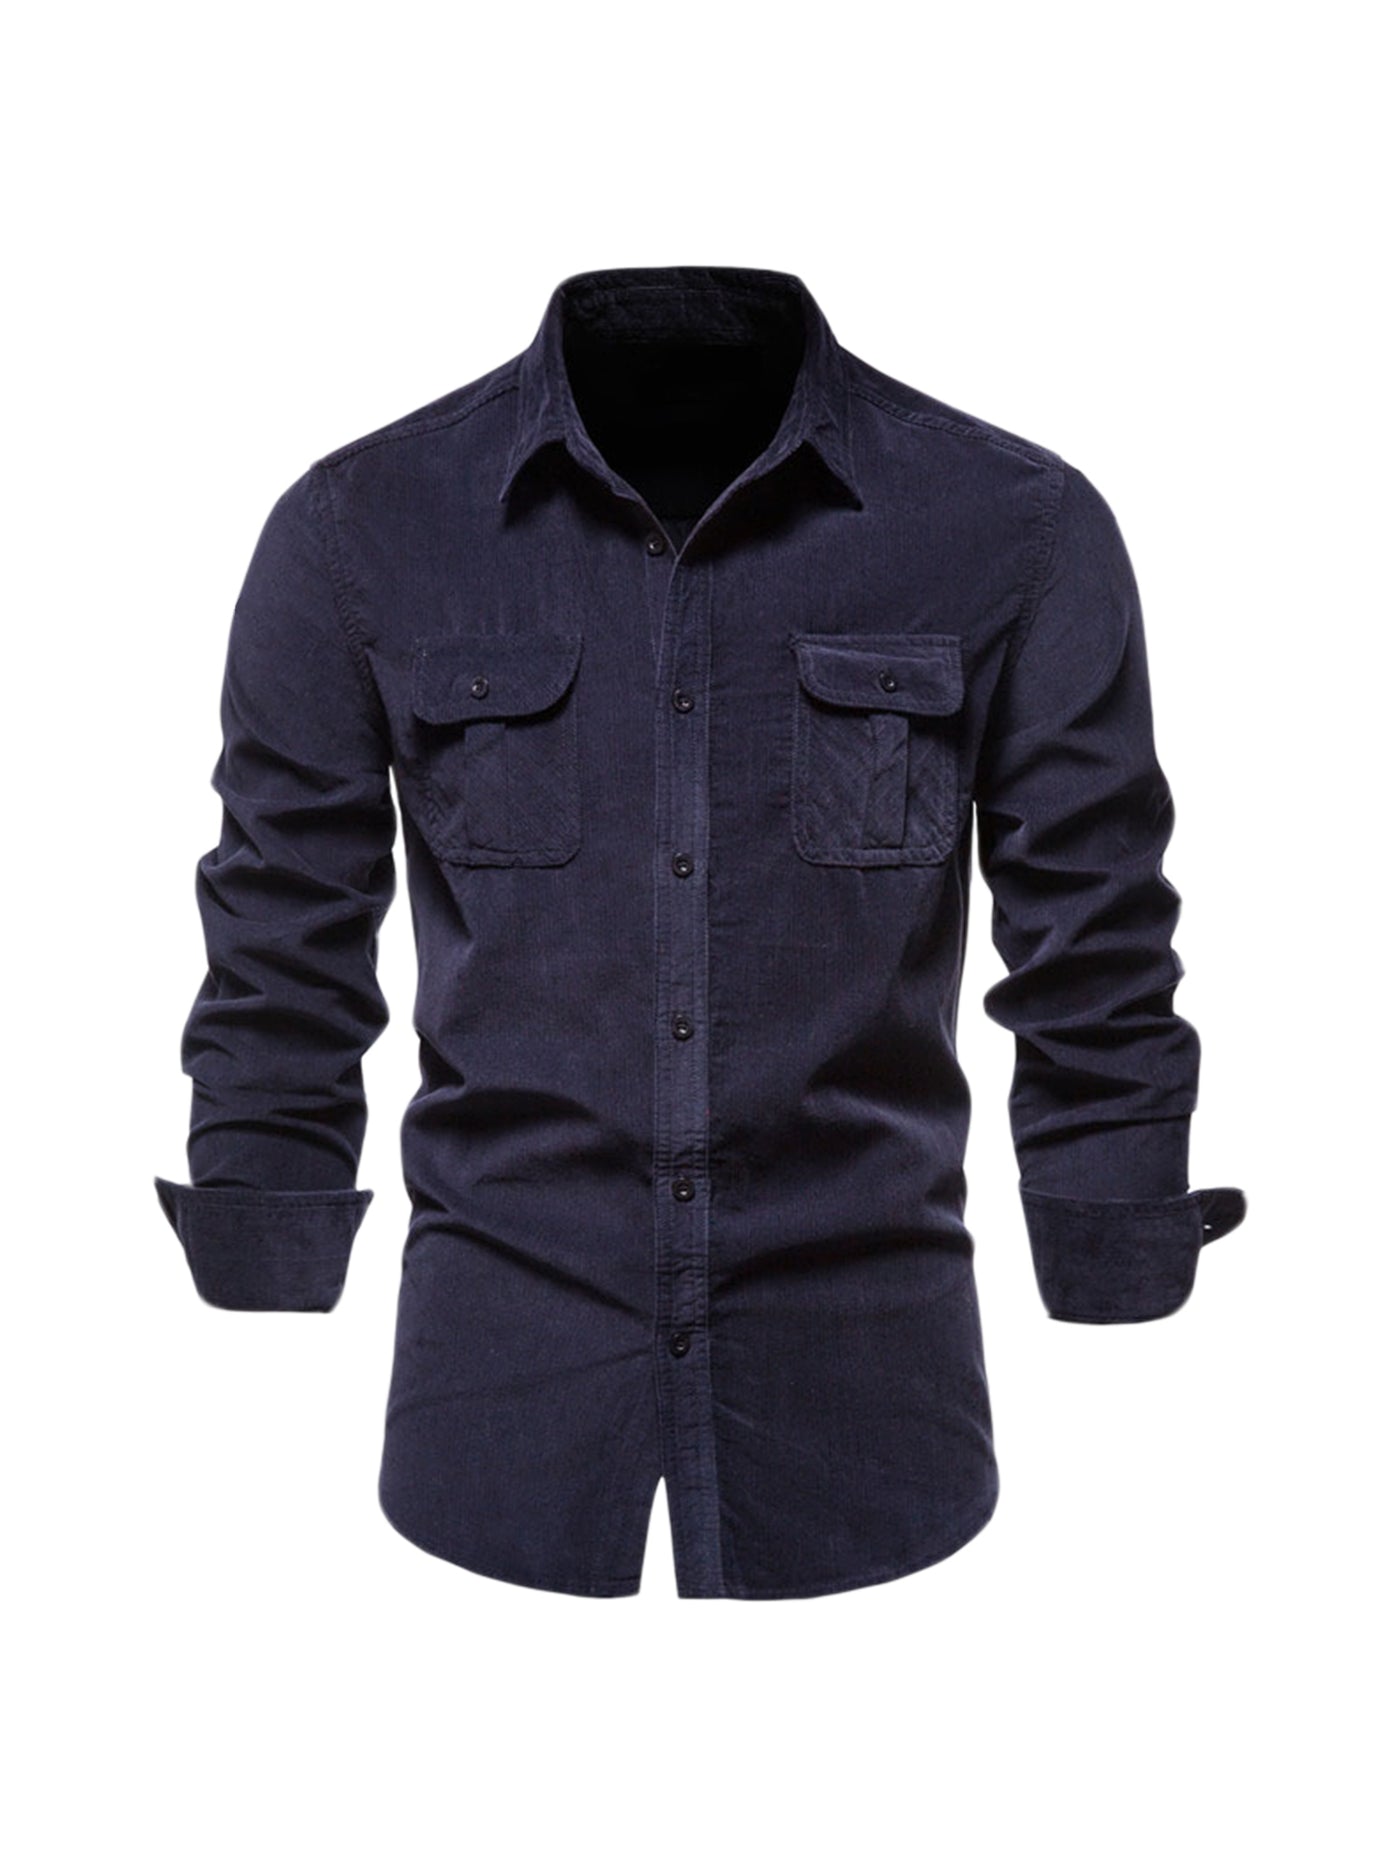 Bublédon Men's Corduroy Shirt Casual Solid Point Collar Button Down Long Sleeves Shirts